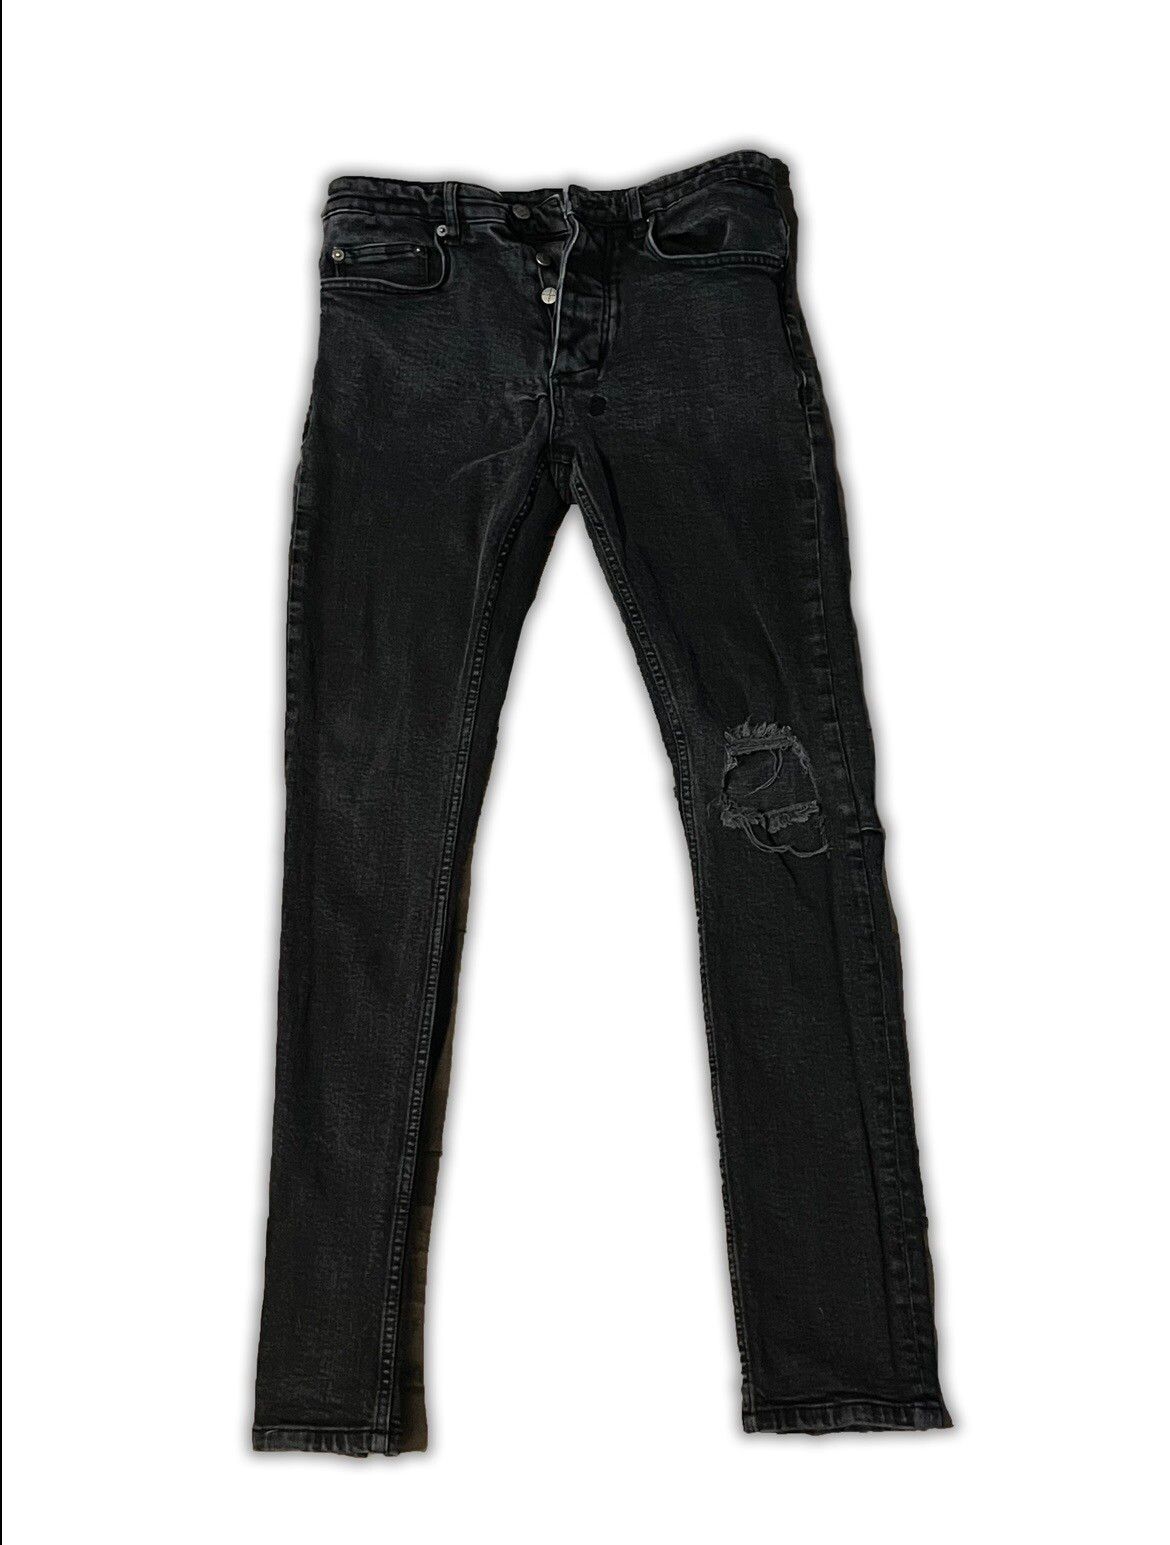 Ksubi Ksubi Chitch Jeans Black | Grailed